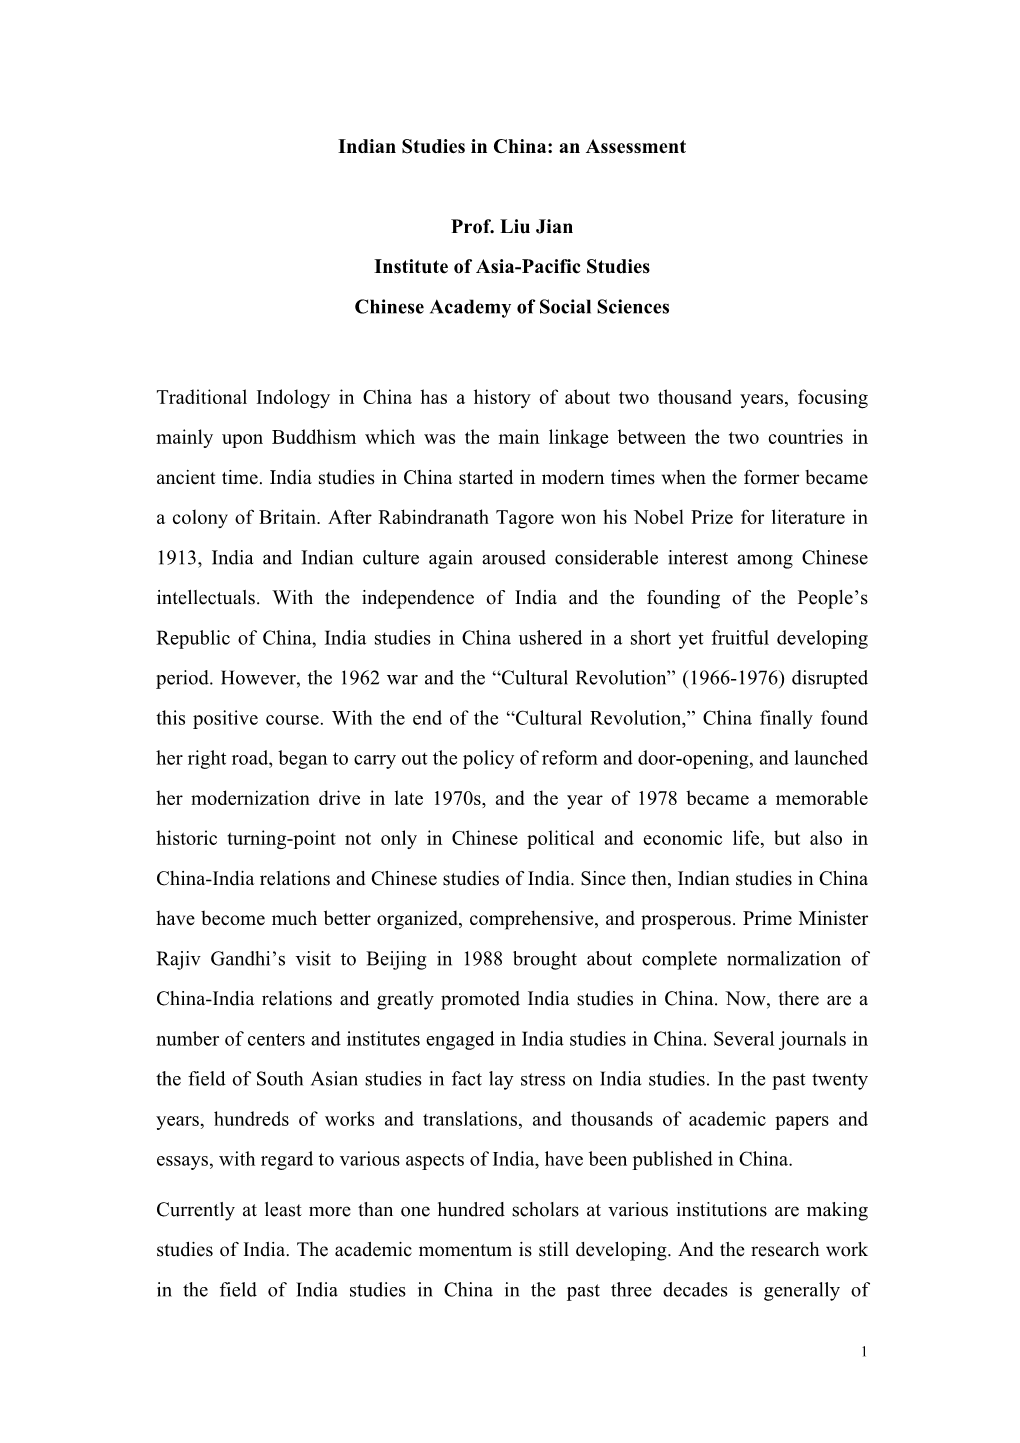 Liu Jian Submission 2013 Unedited